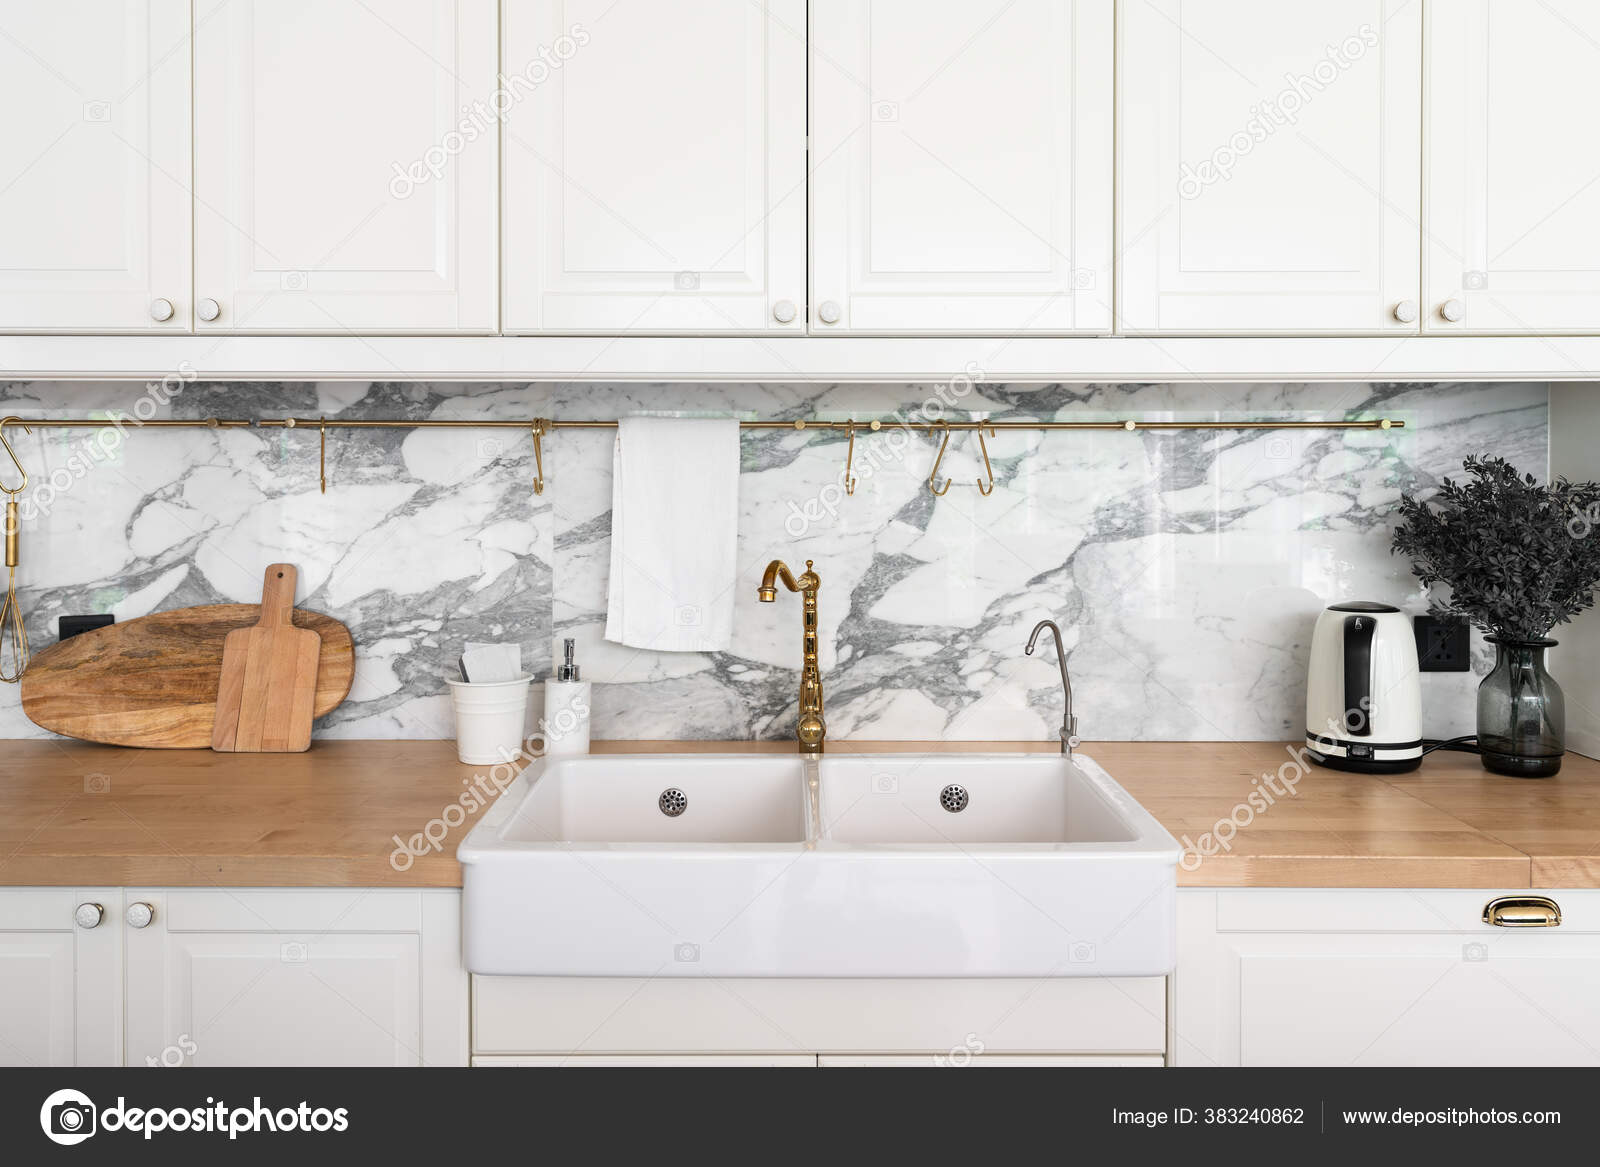 https://st4.depositphotos.com/24853156/38324/i/1600/depositphotos_383240862-stock-photo-modern-classic-kitchen-interior-kitchen.jpg